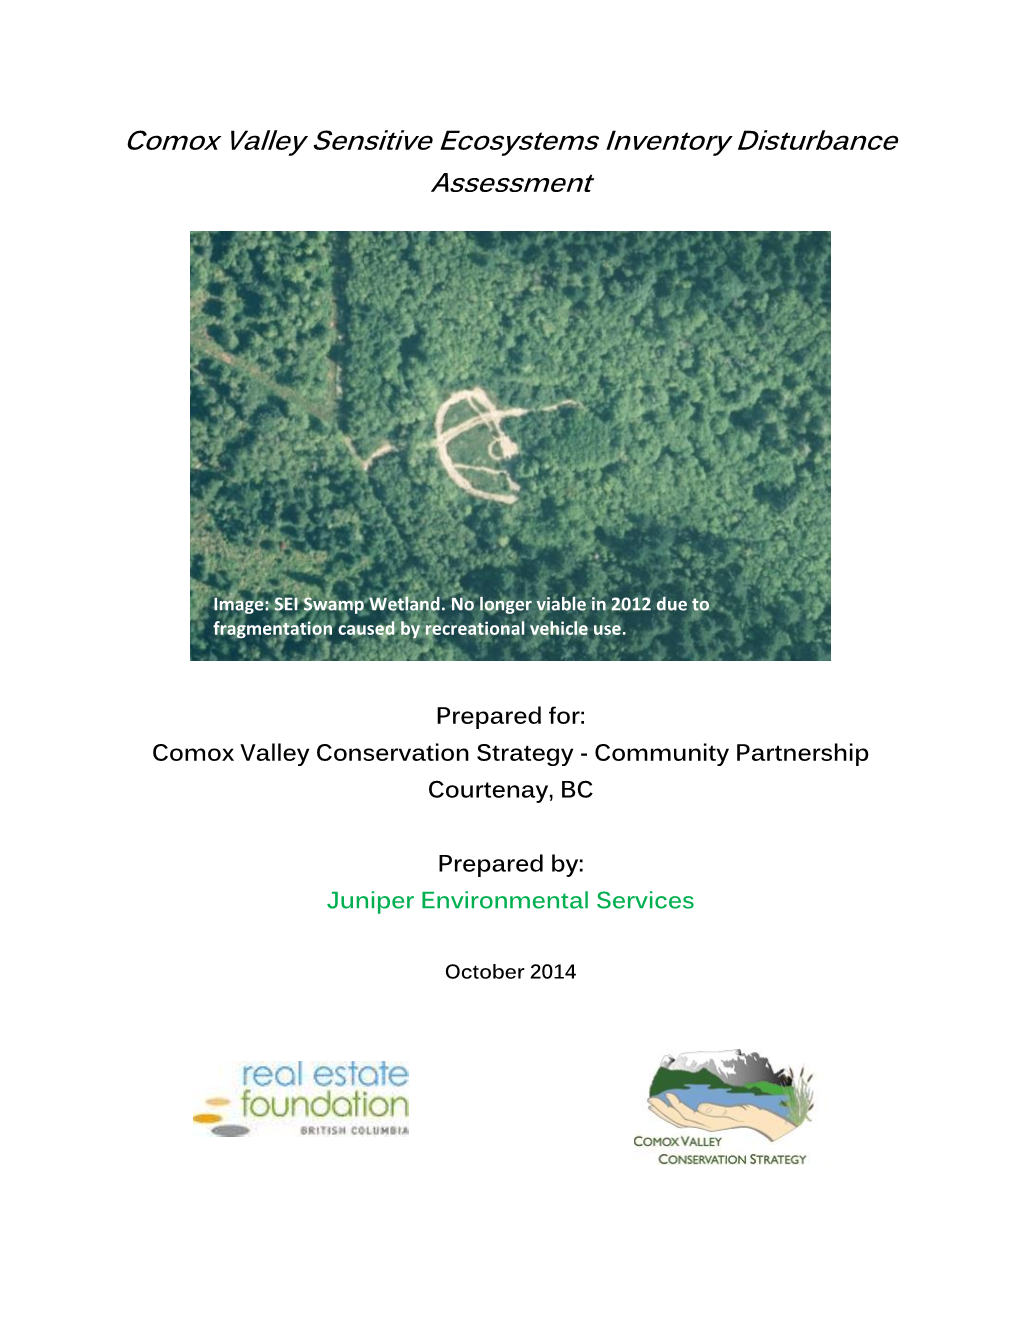 Comox Valley Sensitive Ecosystems Inventory Disturbance Assessment